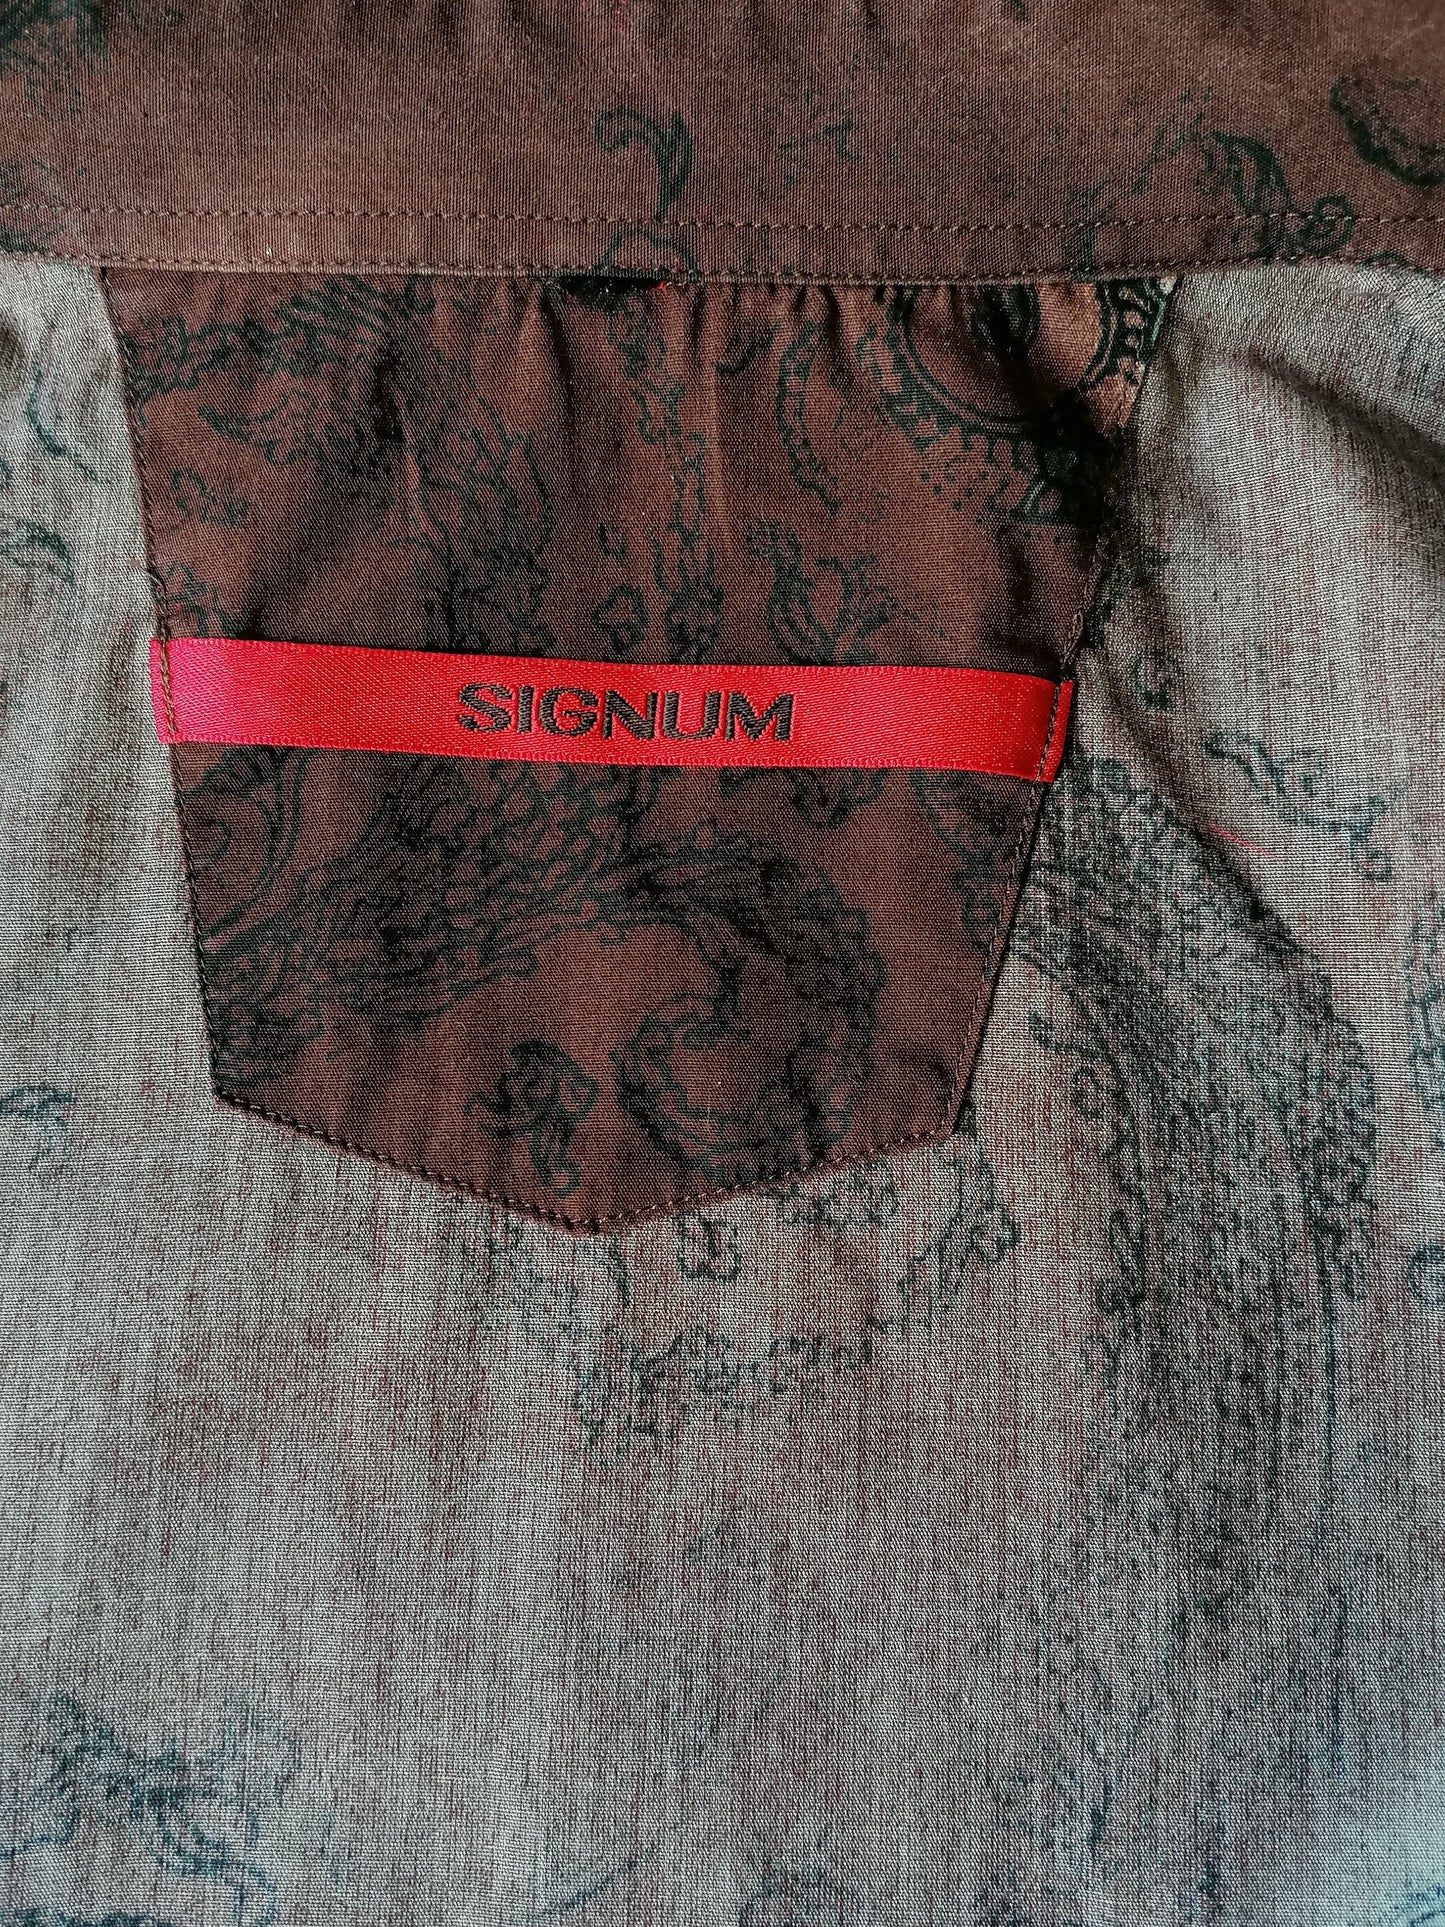 Vintage Signum shirt. Larger buttons. Brown black blue beige print. Size XL.